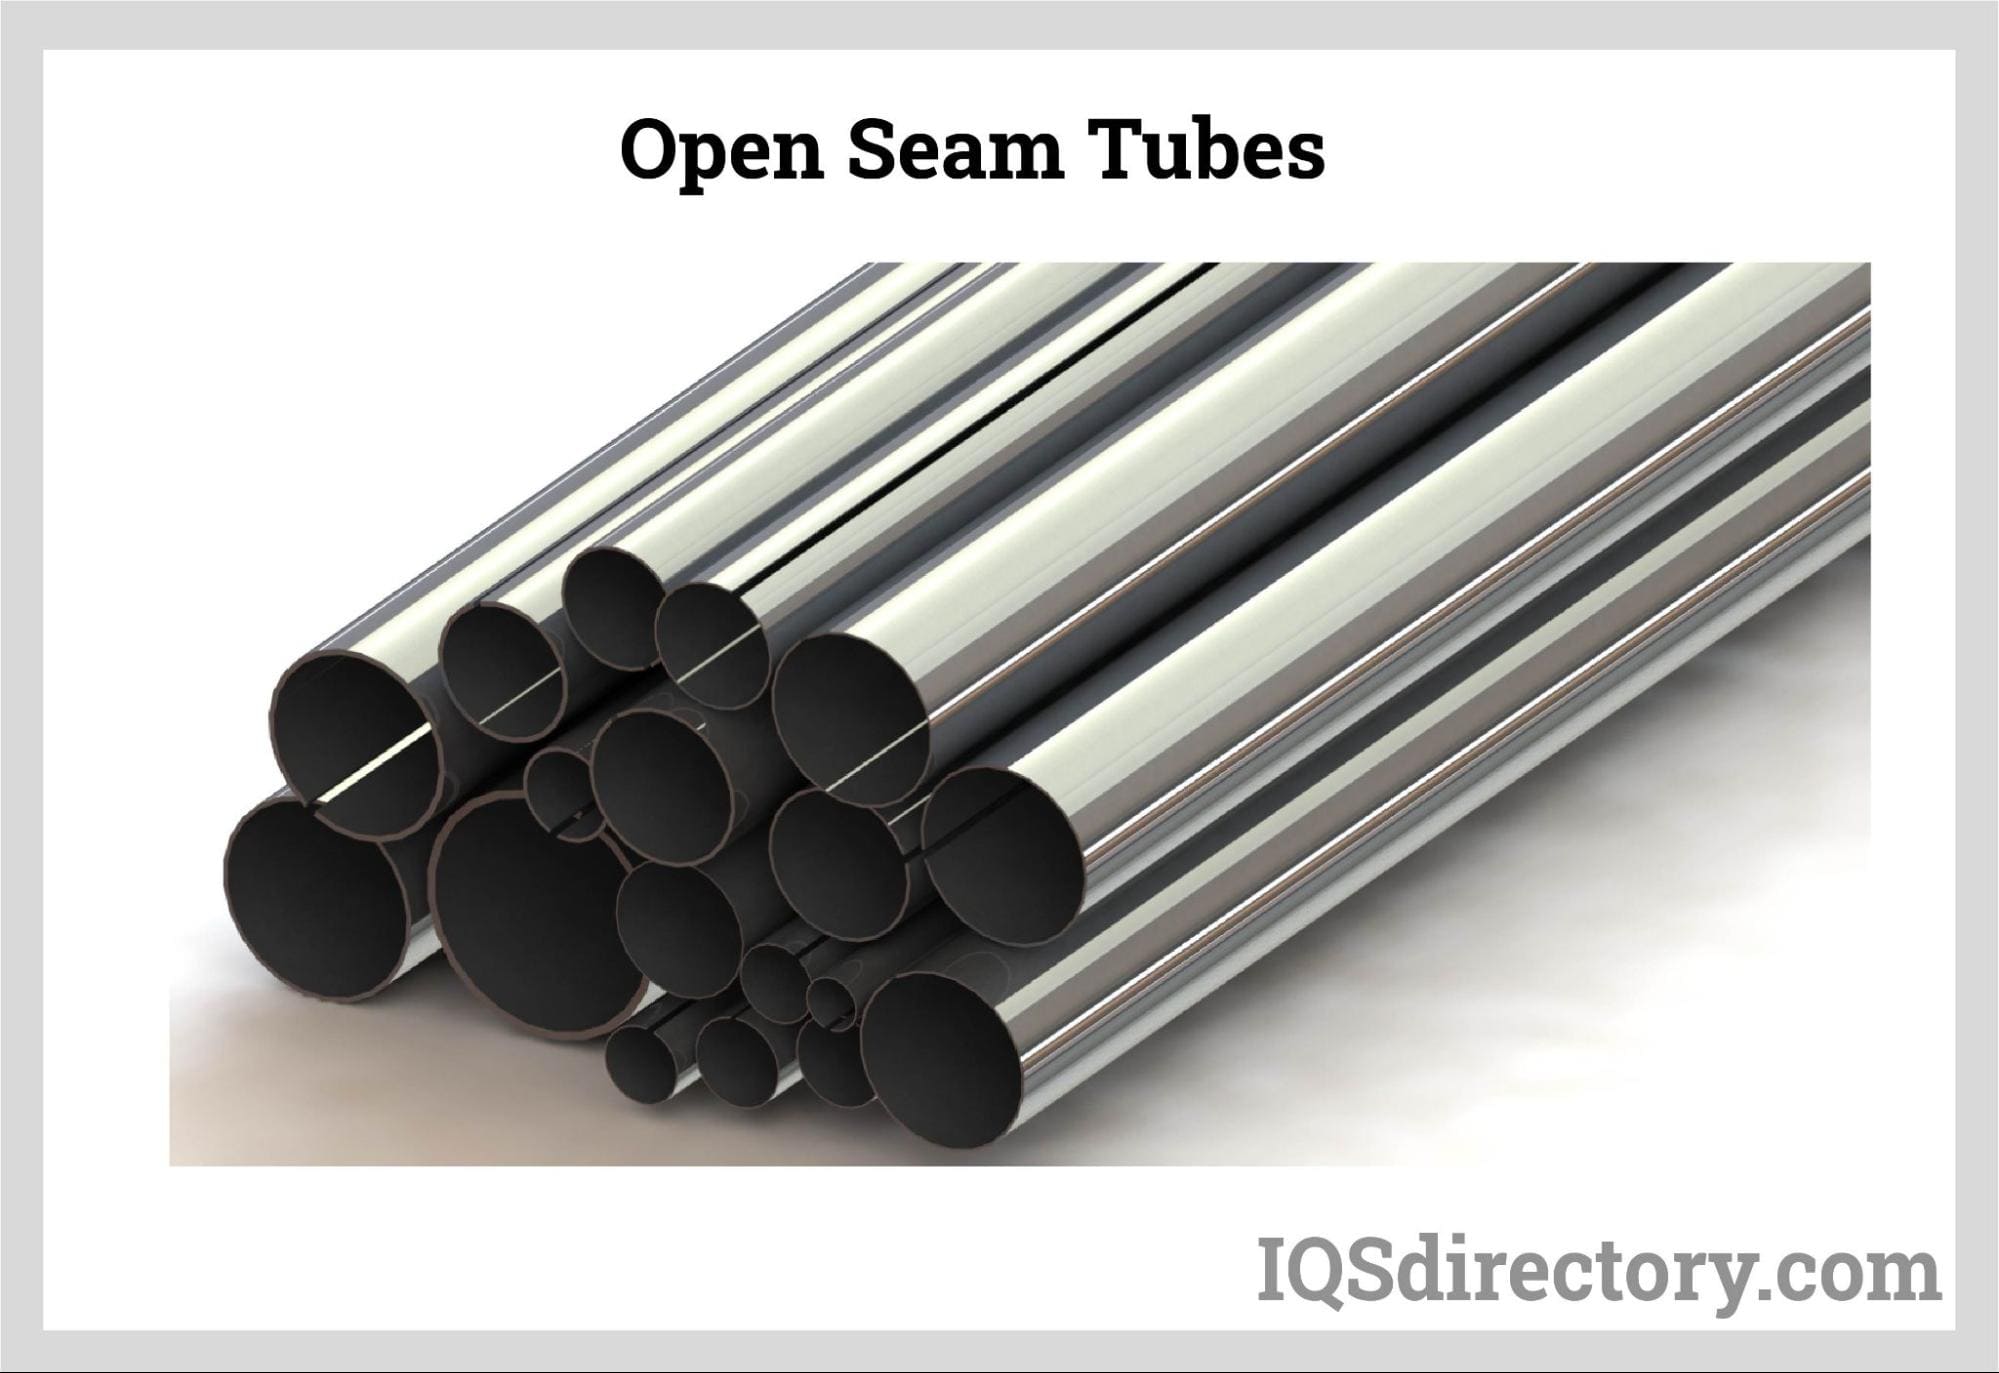 Open Seam Tubes